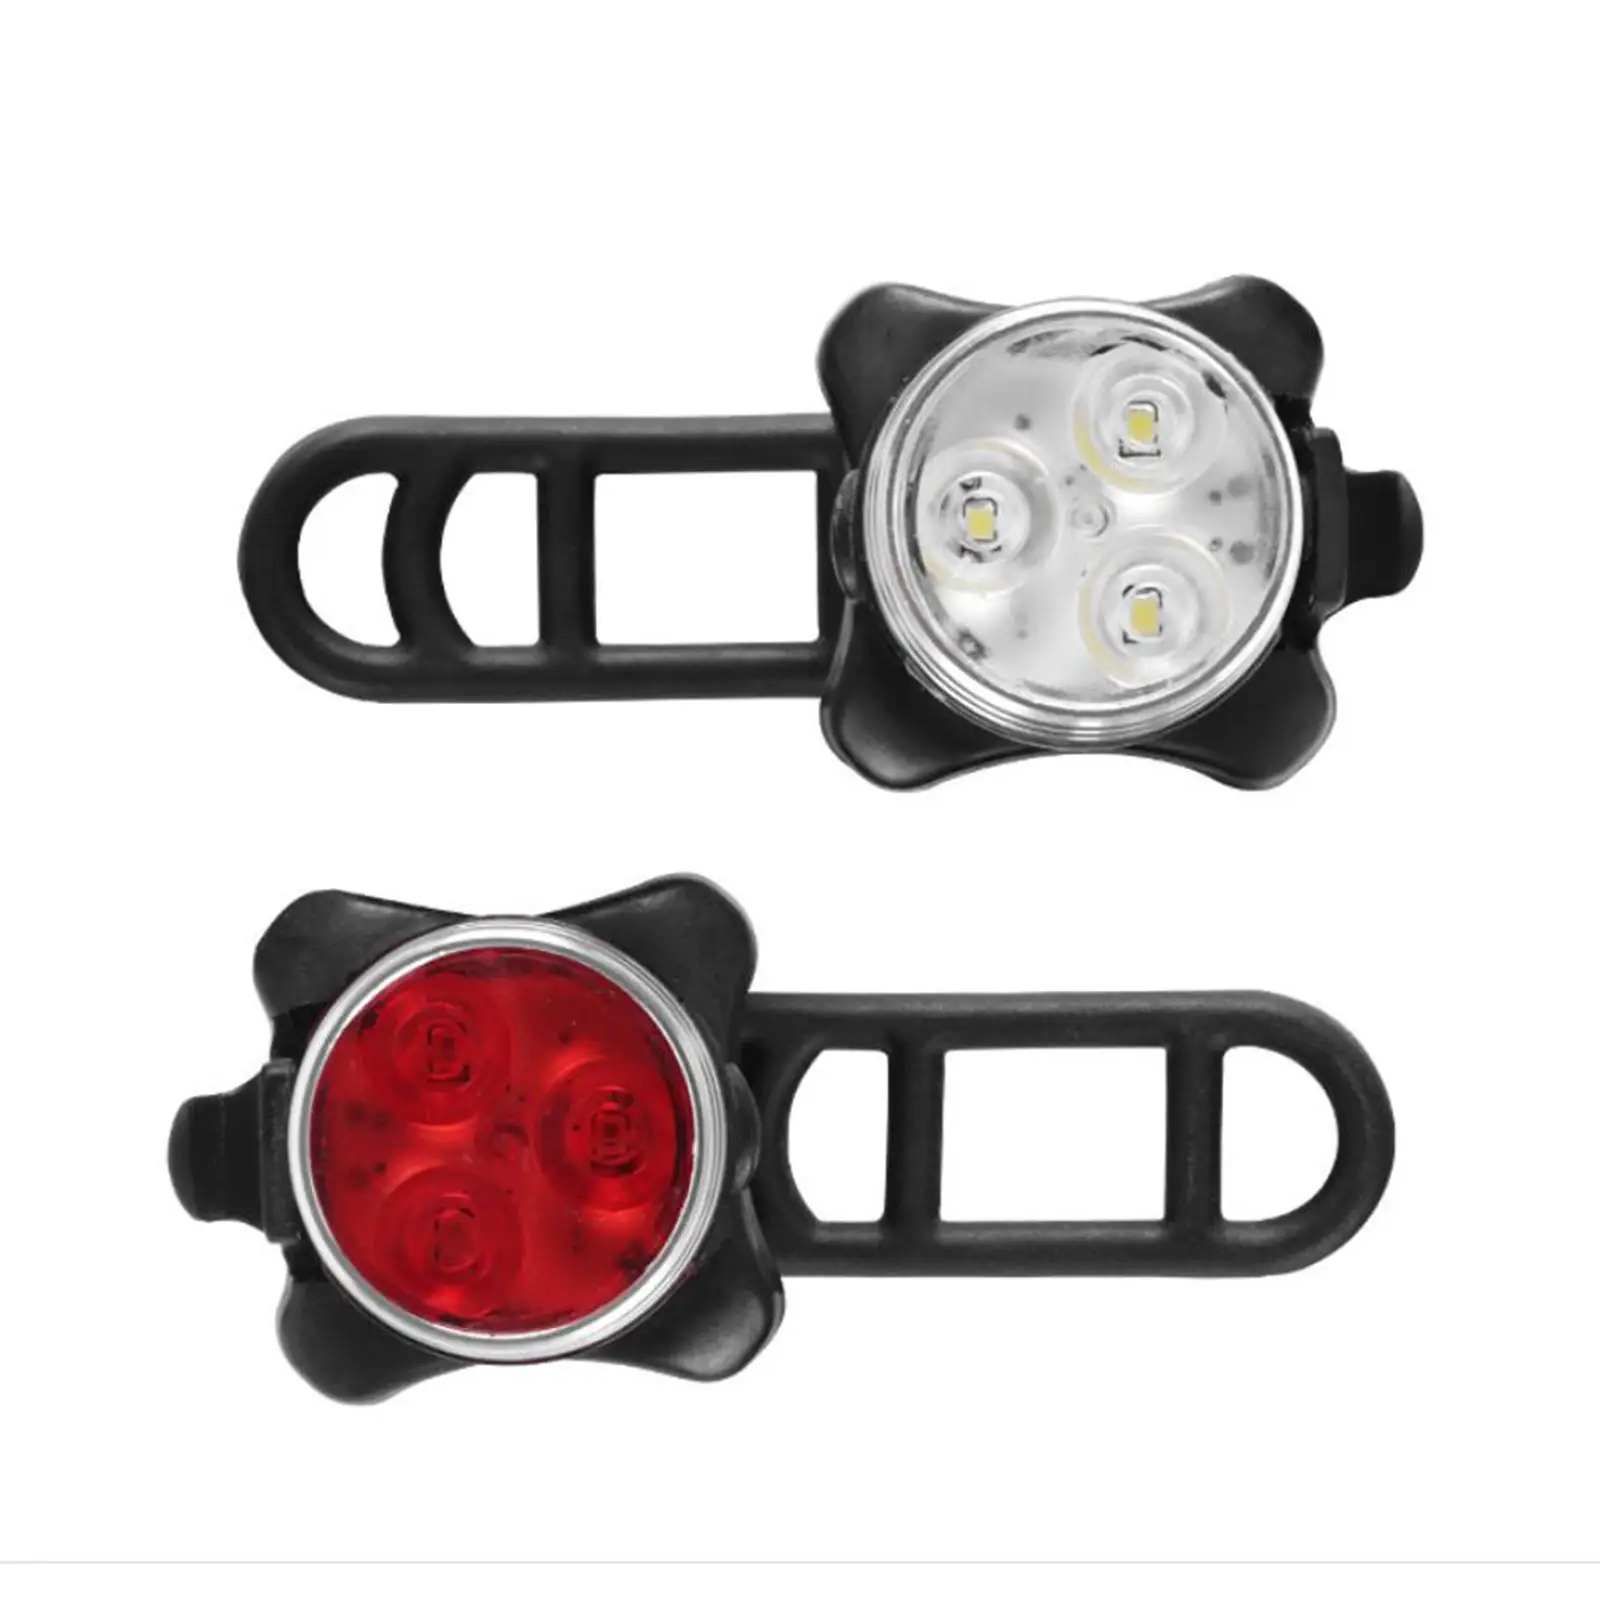 LED Dog Collar Light Flashlight Waterproof Pendant Safety Warning Small Clip Light for Running Kayaking Night Walking Biking